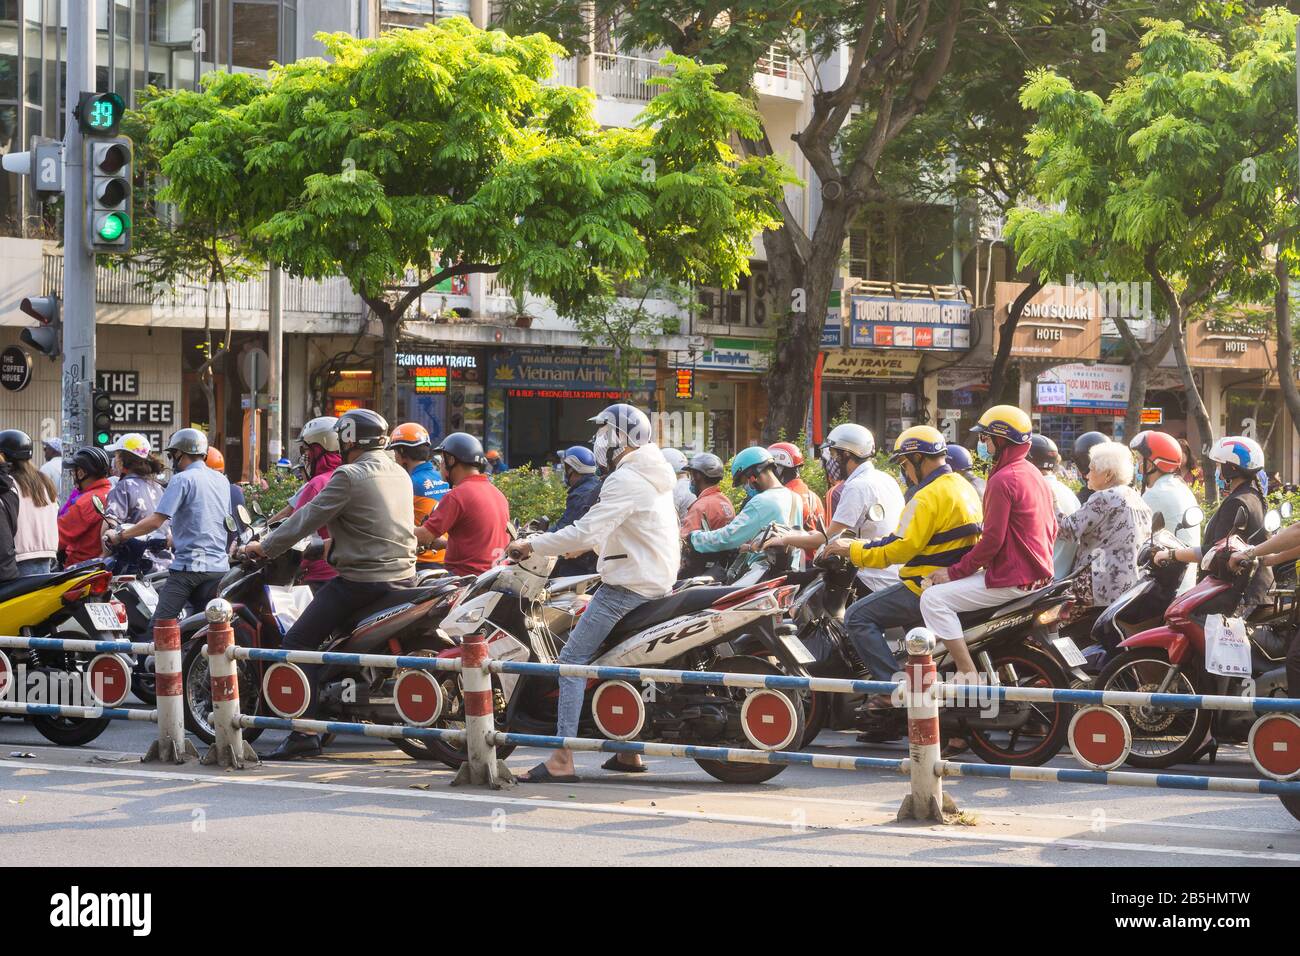 Saigon (Ho Chi Minh City) Vietnam - Motorbikes on a street of Saigon during the rush hour. Vietnam, Southeast Asia. Stock Photo